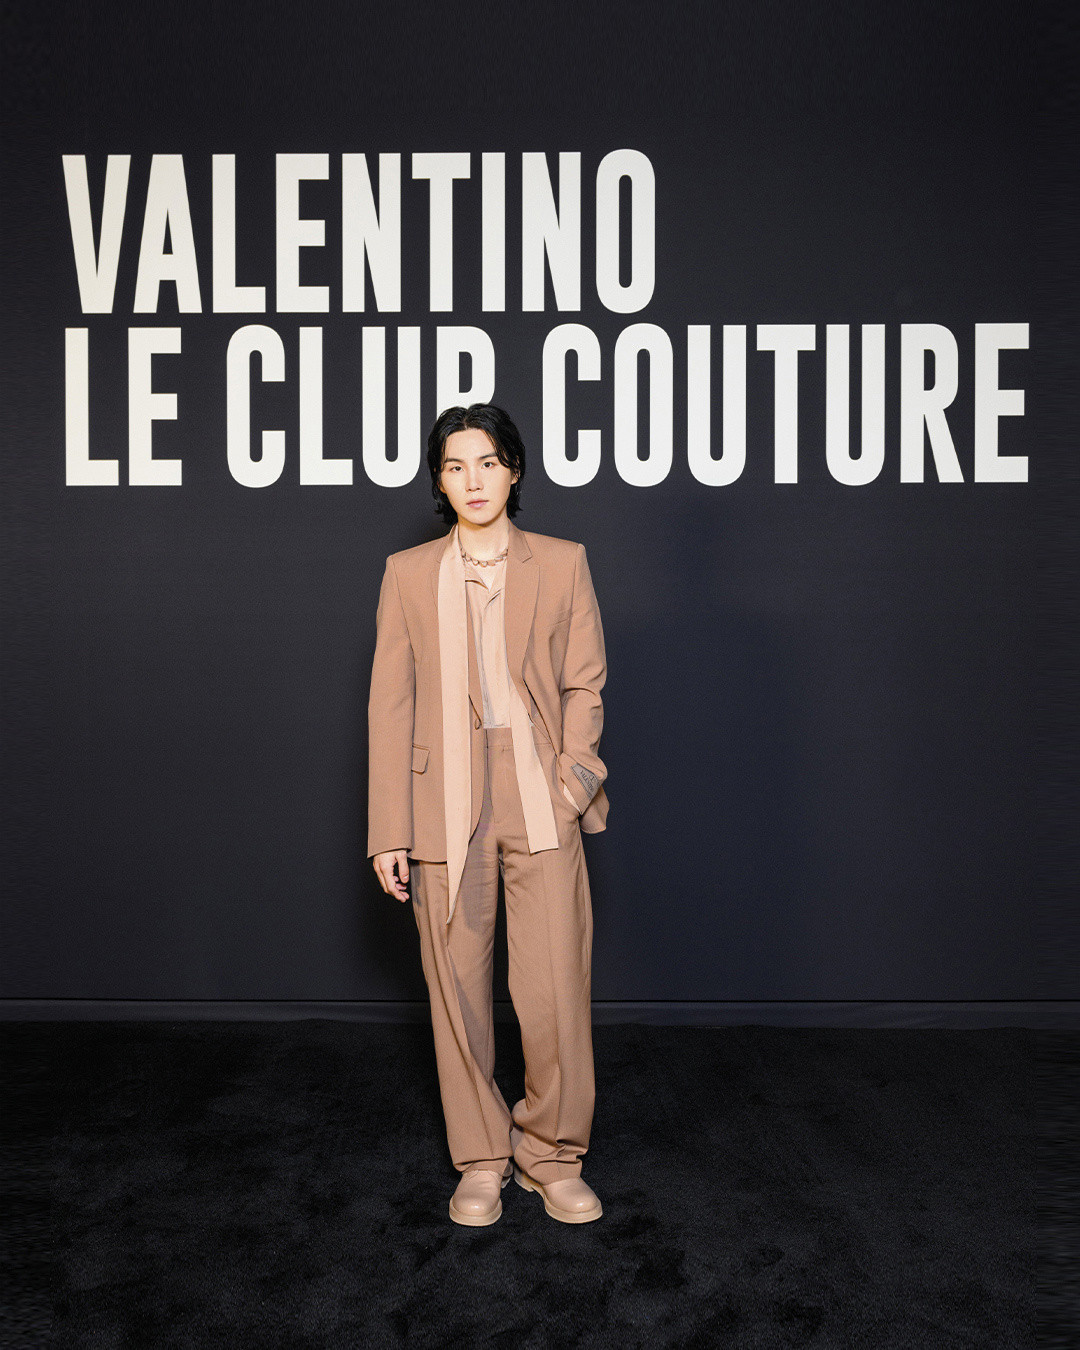 BTS's SUGA is Valentino's new Brand Ambassador